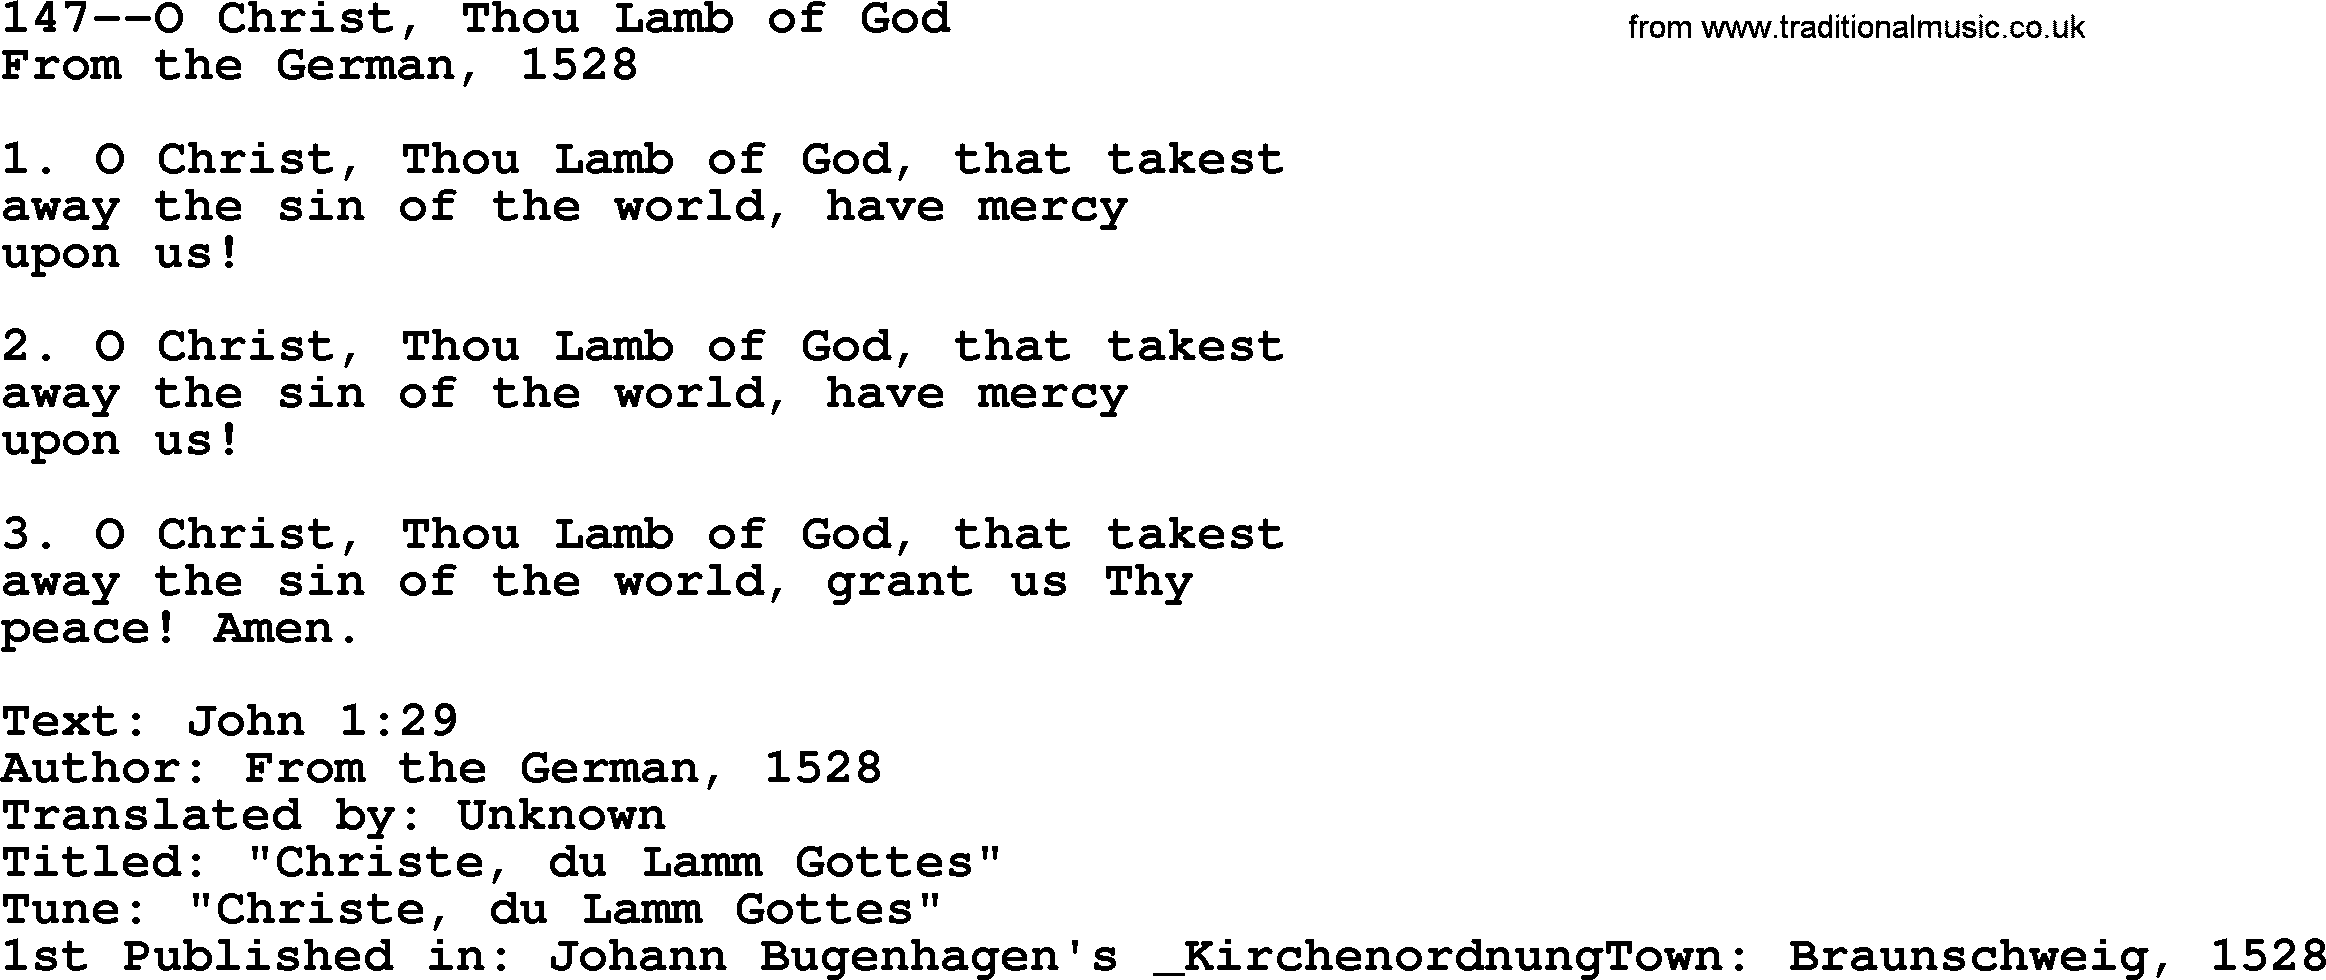 Lutheran Hymn: 147--O Christ, Thou Lamb of God.txt lyrics with PDF